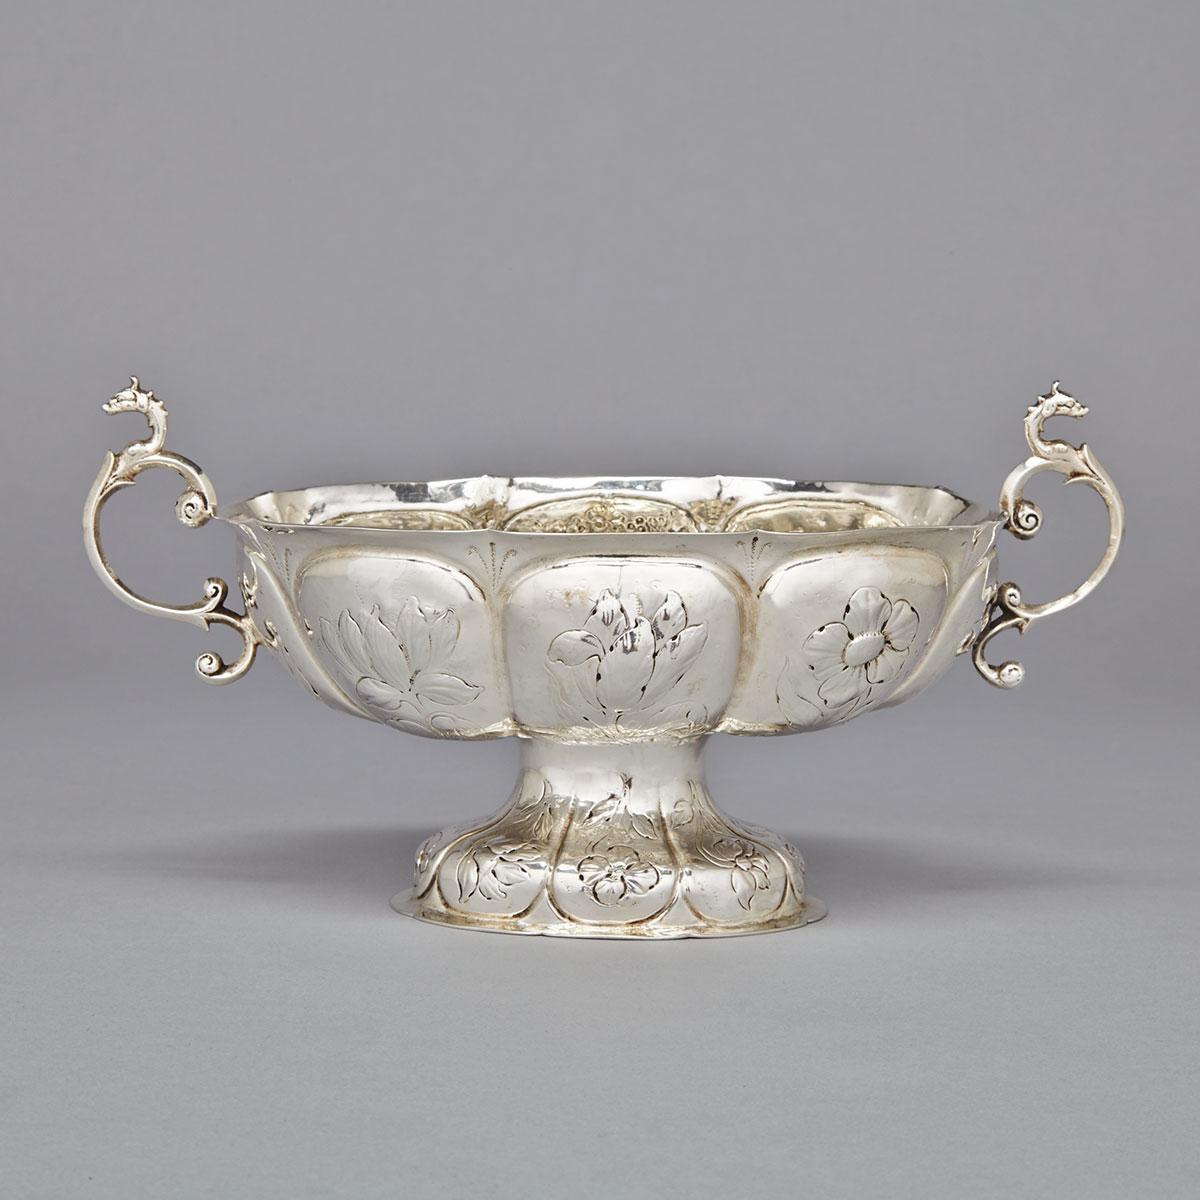 Dutch Silver Oval Brandy Bowl, probably Arent Hamminck, Groningen, 1671-72